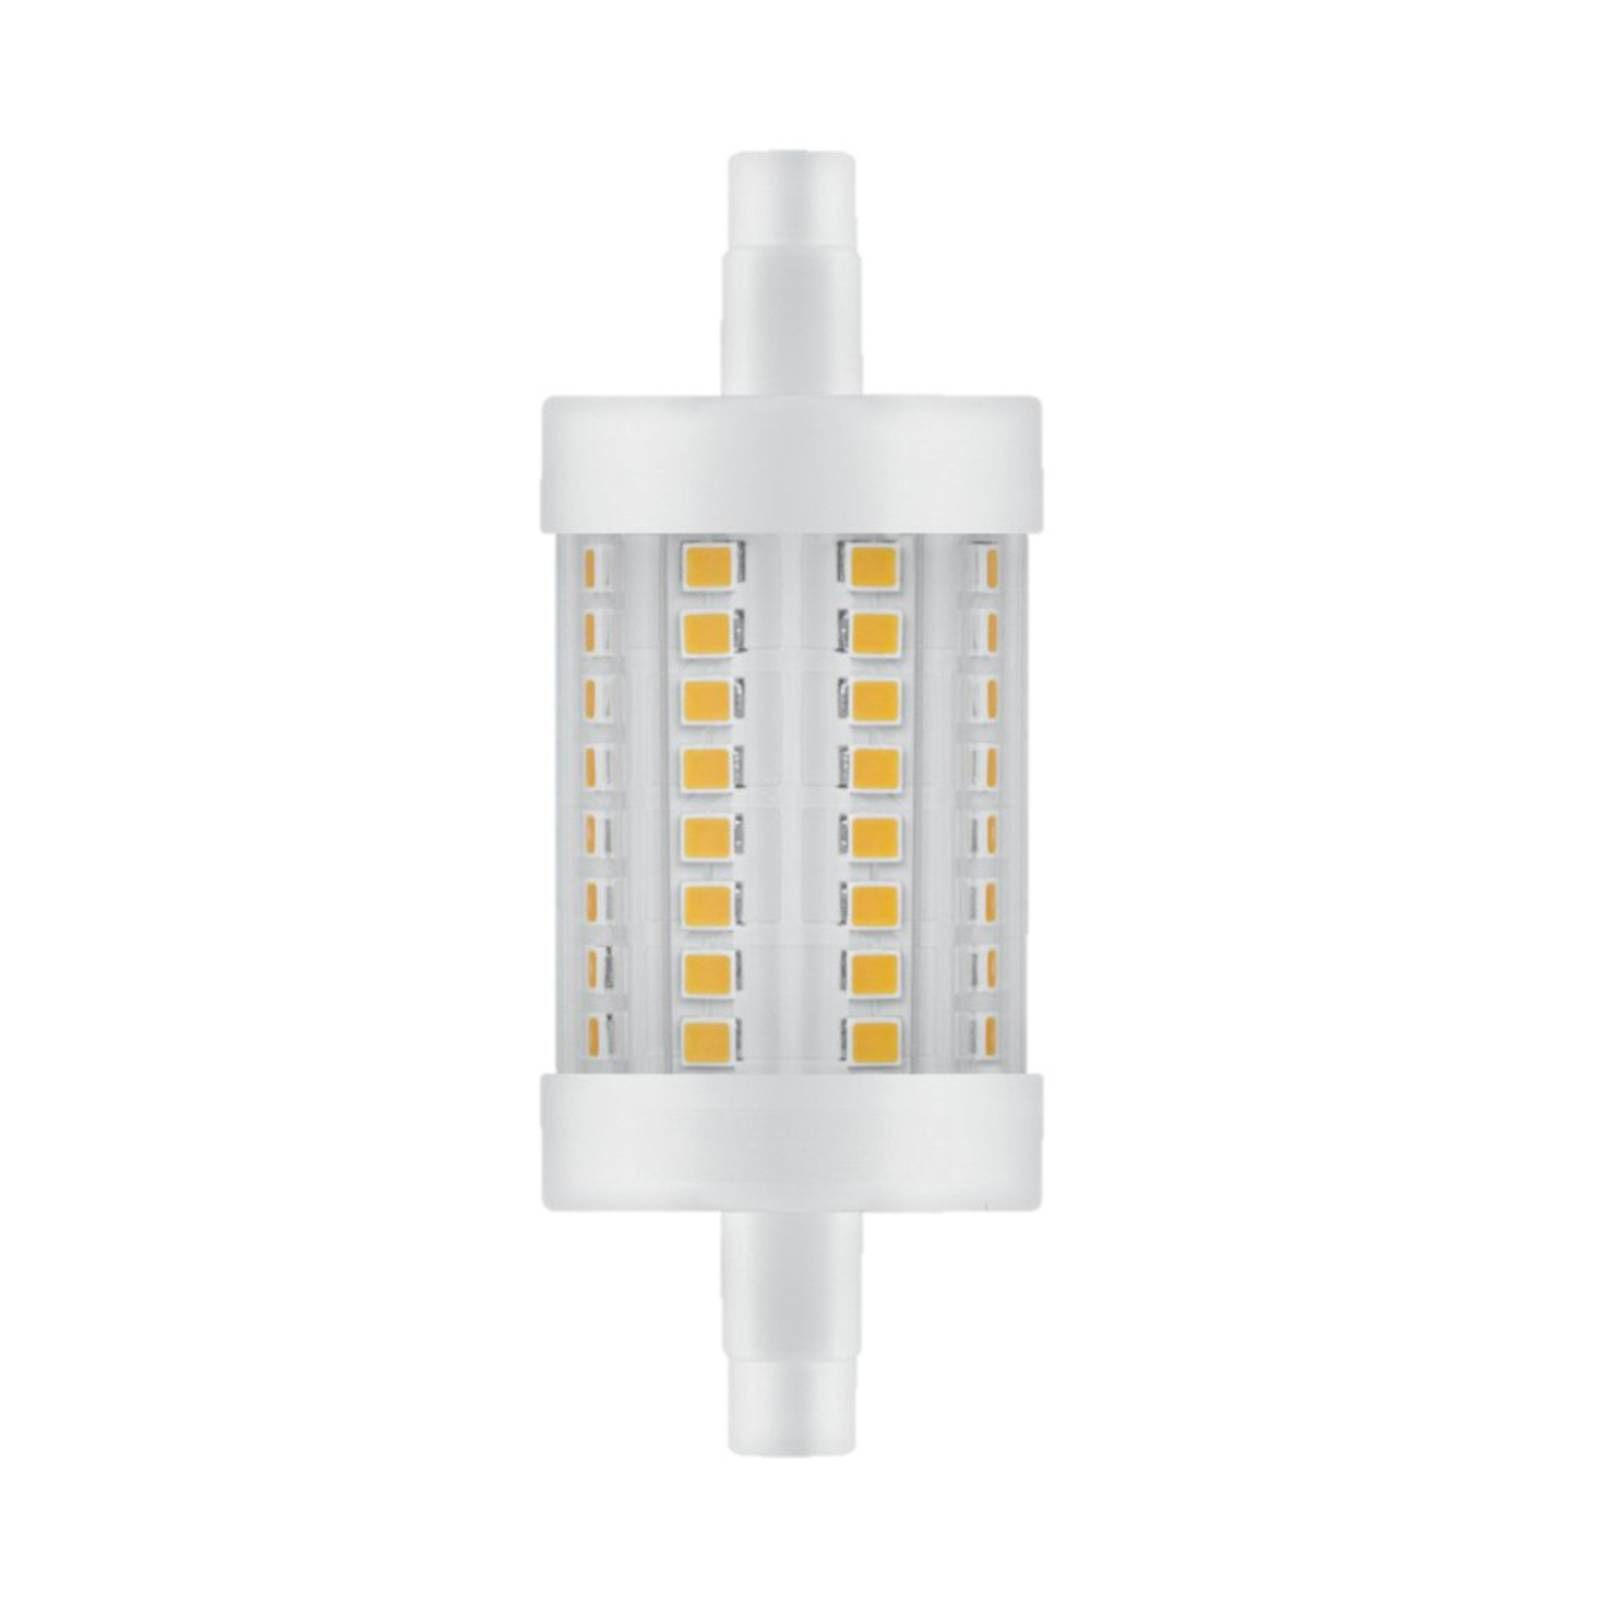 Radium LED Essence žiarovka R7s 7W 806lm, plast, kov, R7s 78.3 mm, 7W, Energialuokka: E, P: 7.8 cm